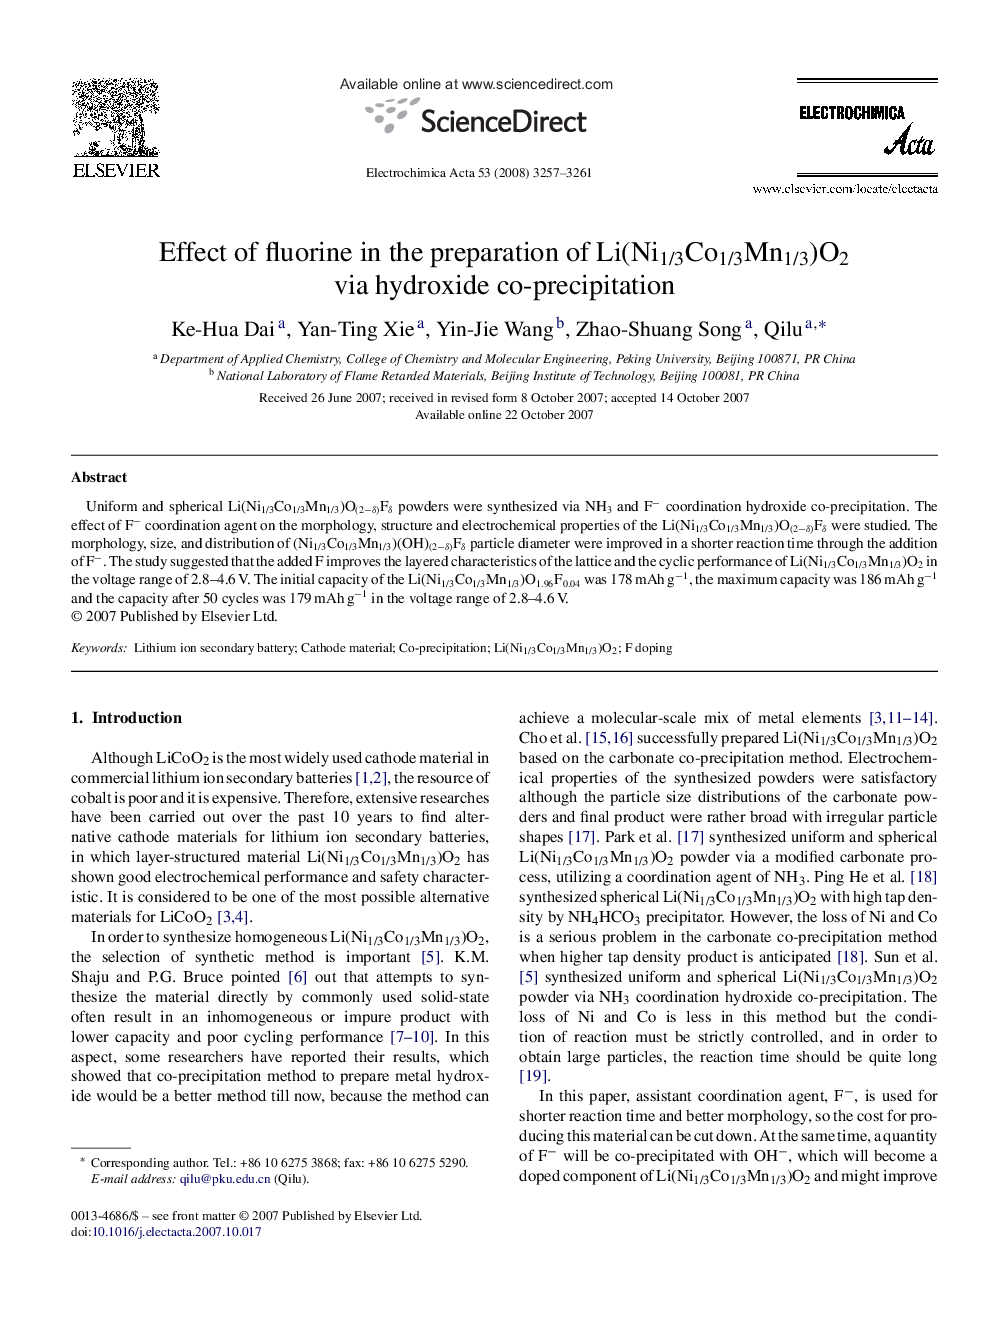 Effect of fluorine in the preparation of Li(Ni1/3Co1/3Mn1/3)O2 via hydroxide co-precipitation